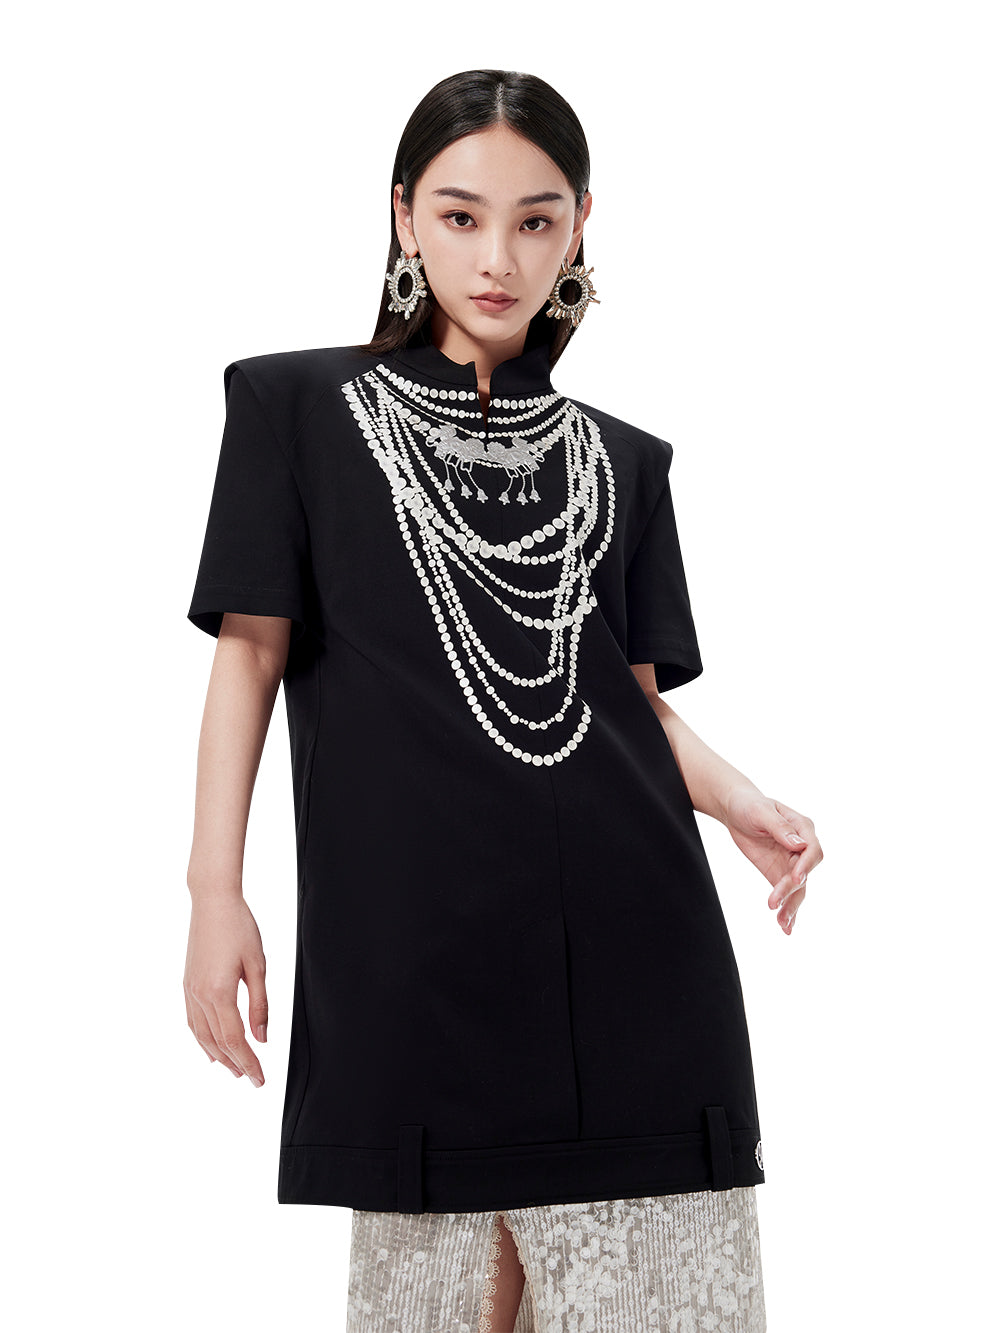 MUKZIN Chinese Style Stand Collar Loose Fashion Rivet Dress